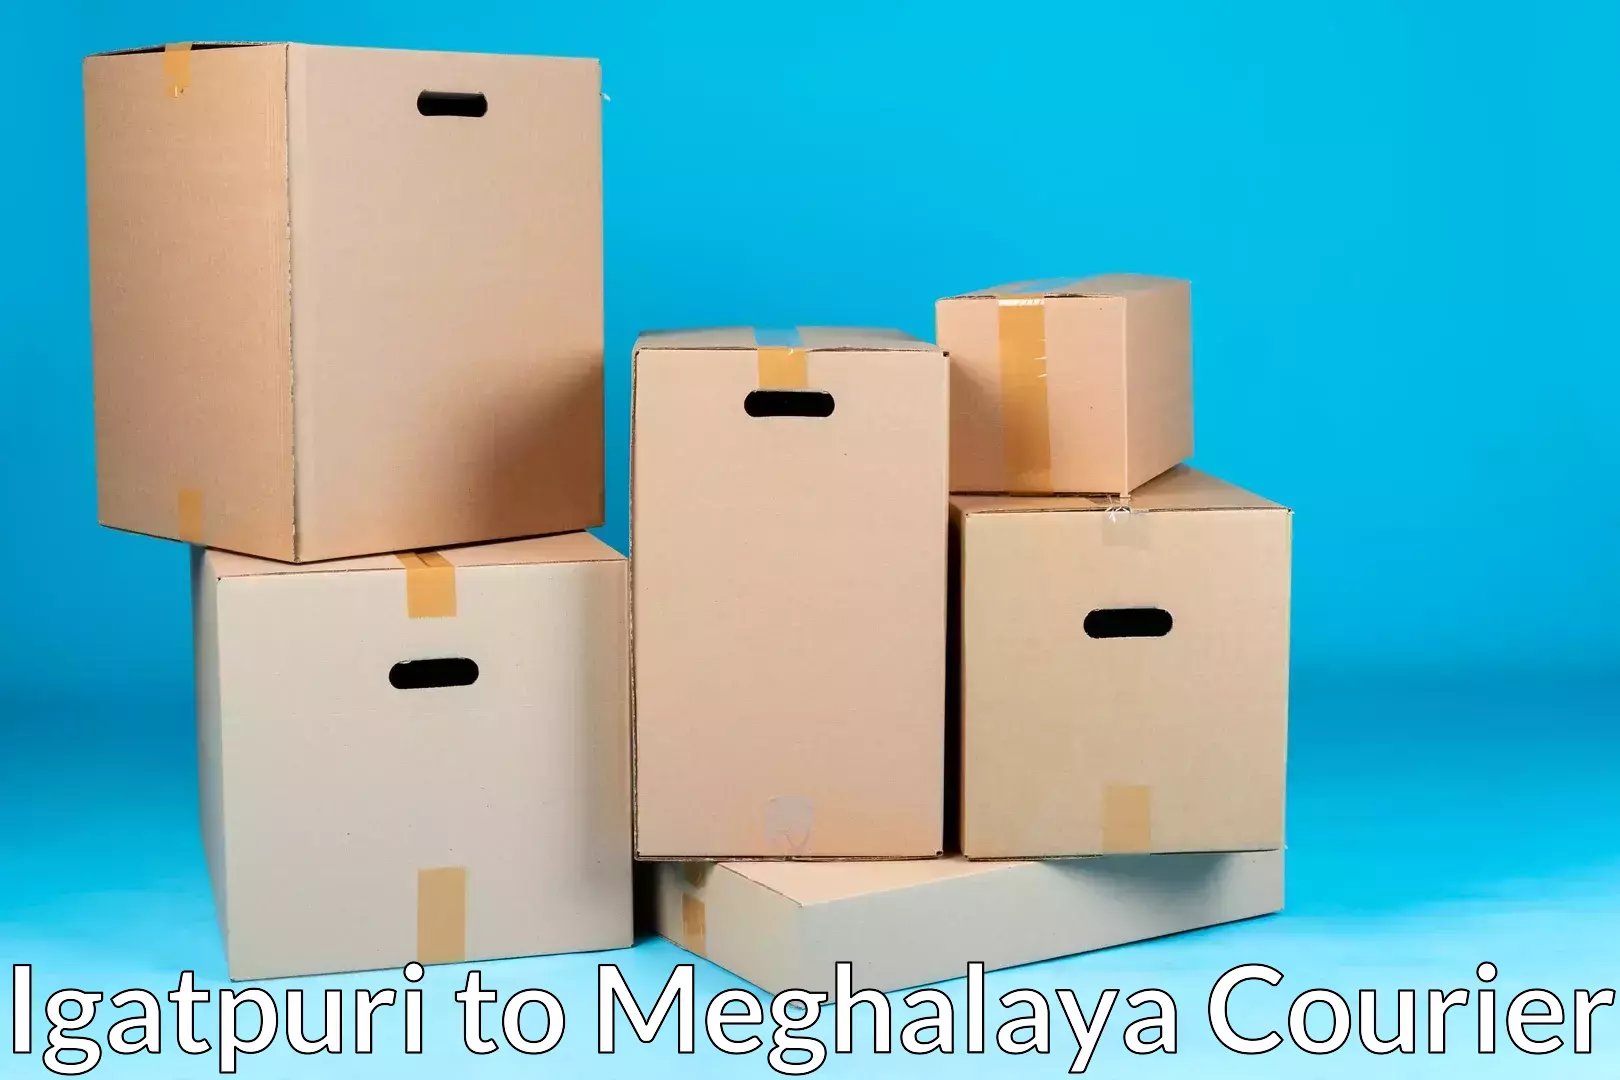 Moving and packing experts Igatpuri to Meghalaya